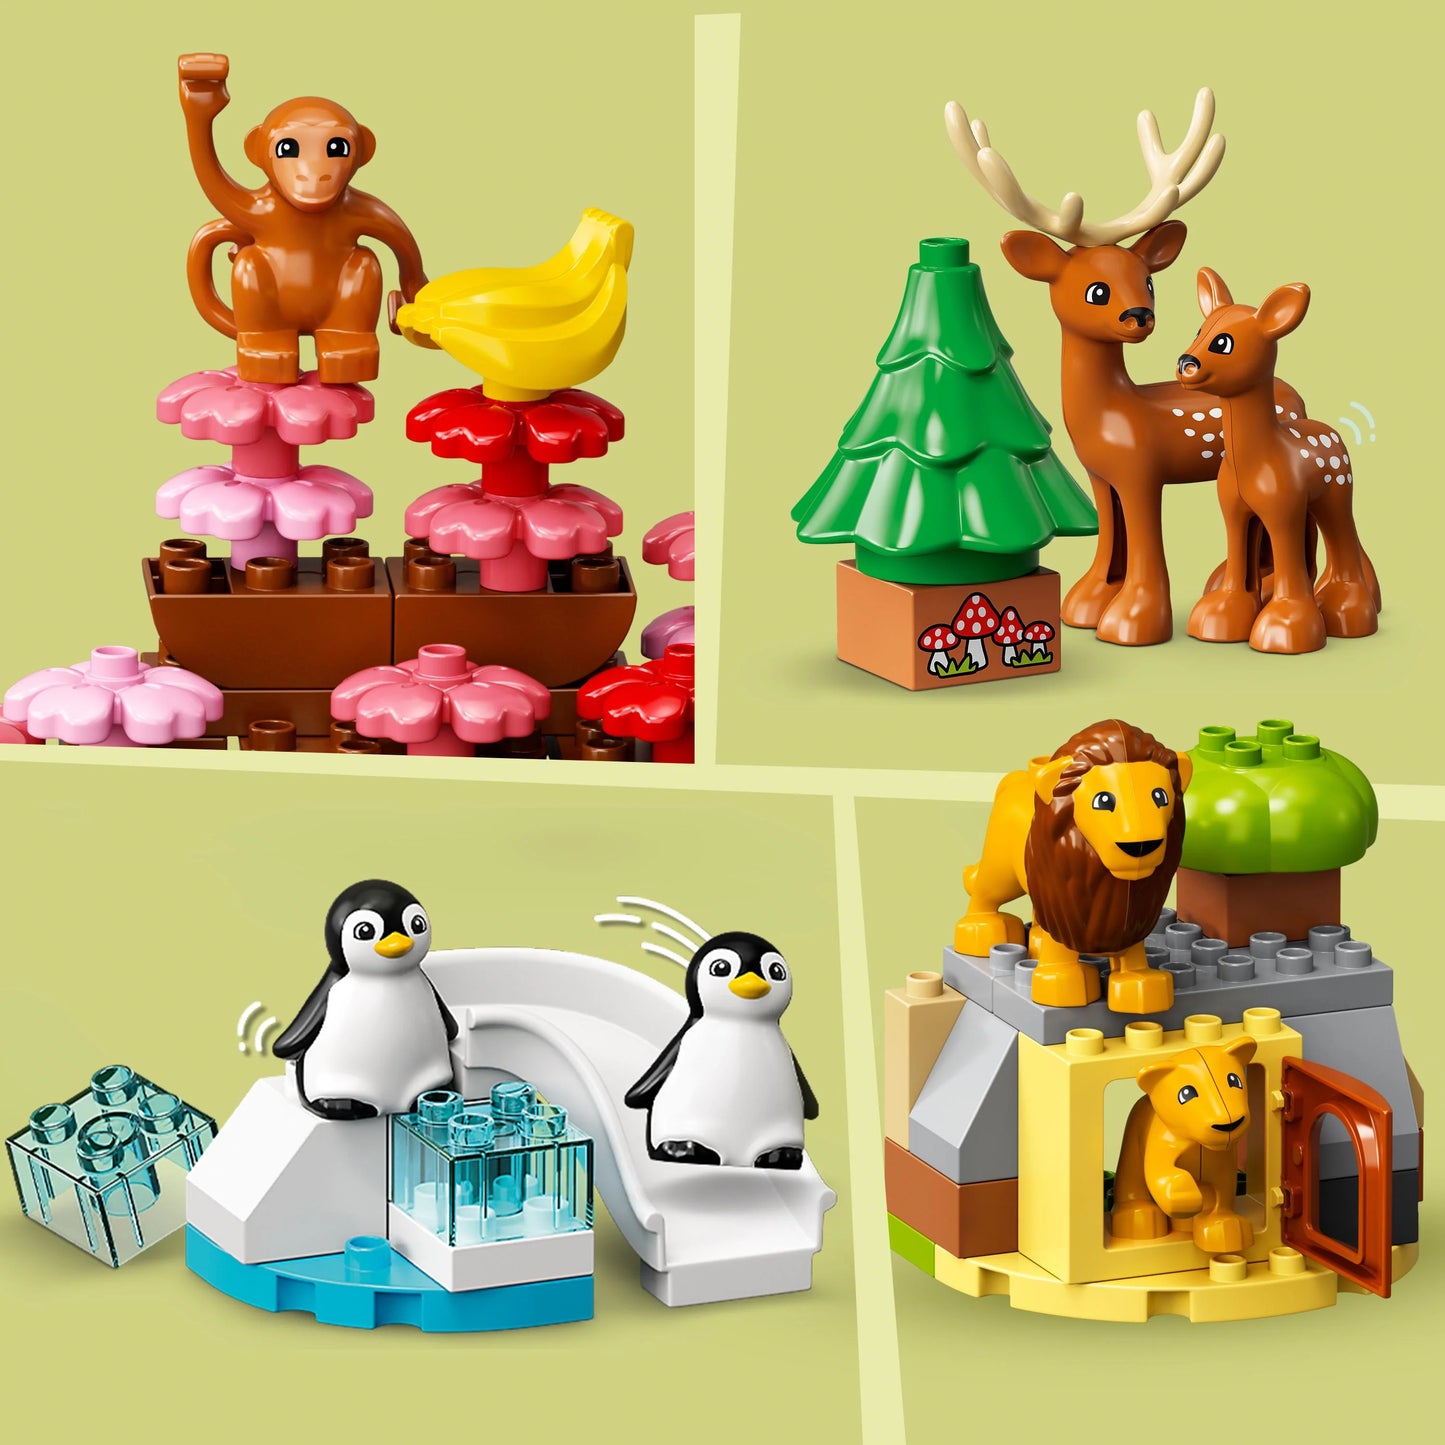 Wild Animals of the World - LEGO Duplo